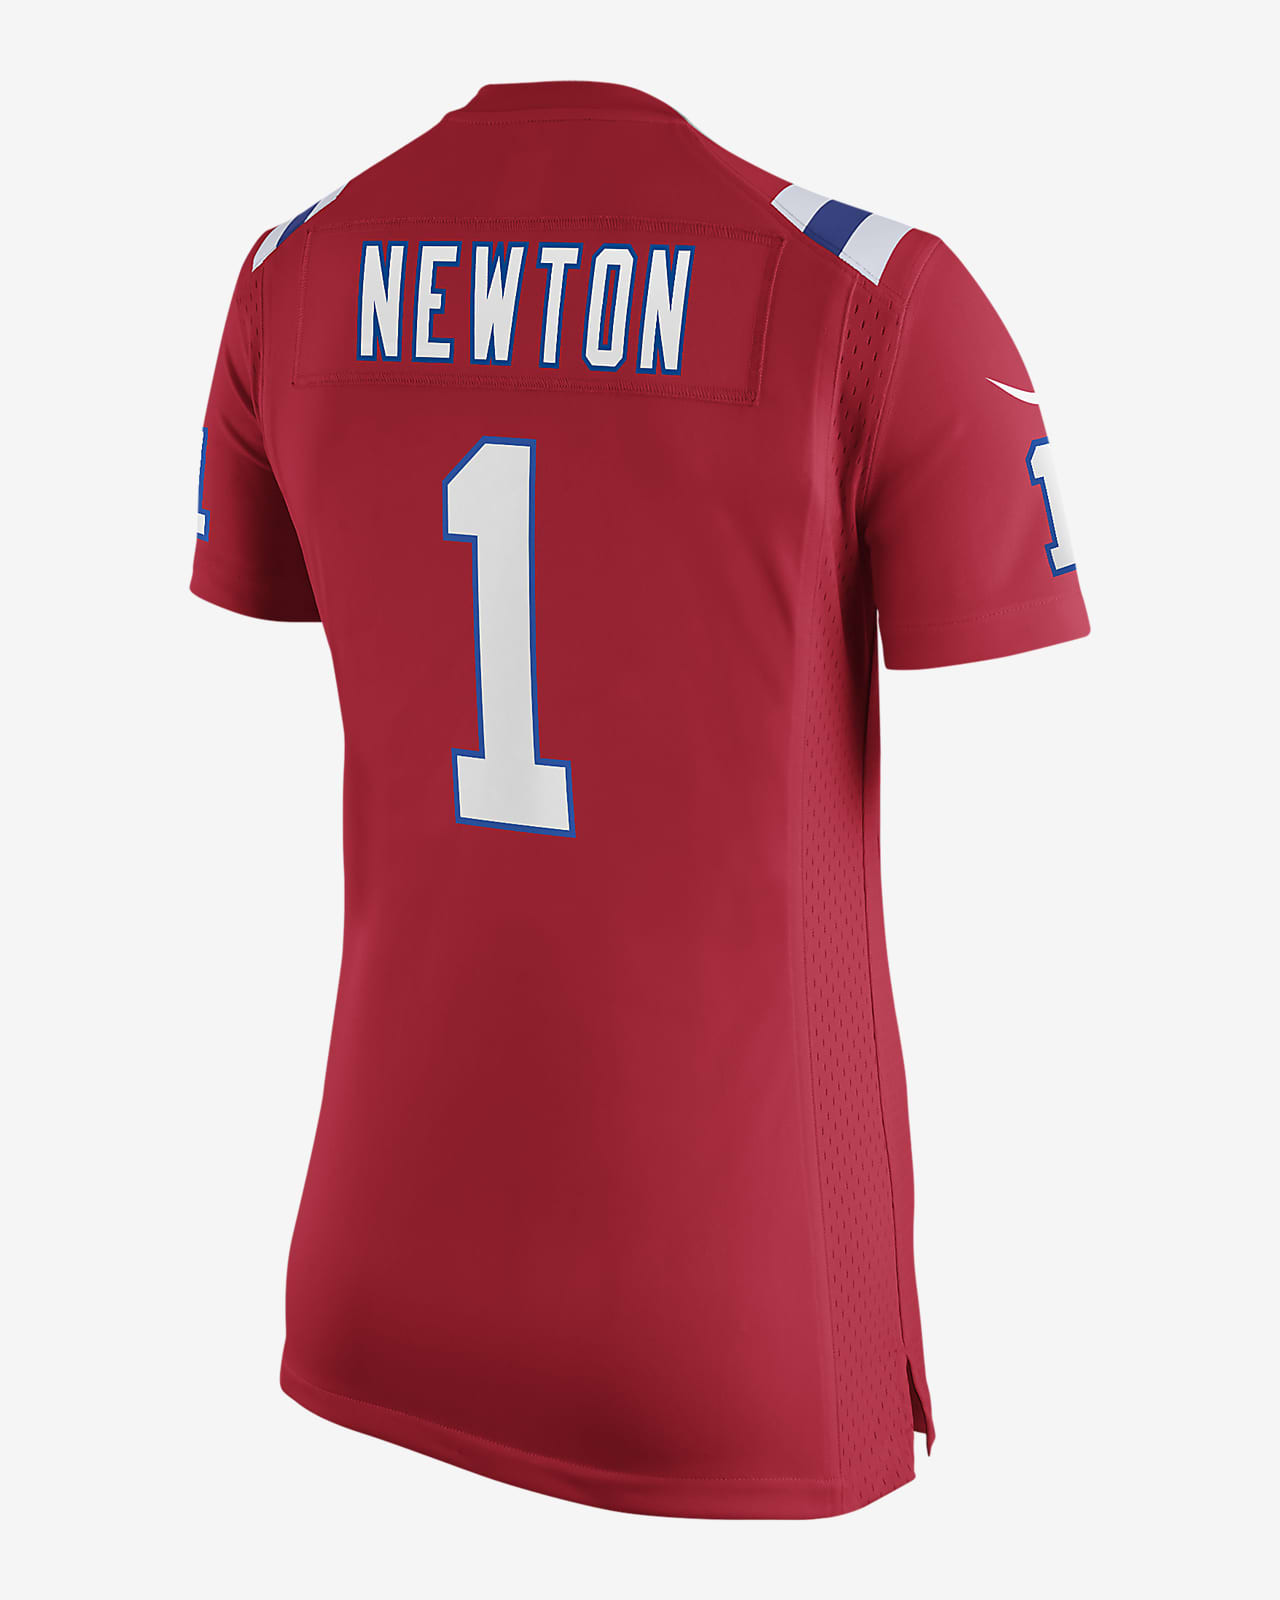 patriots jersey newton